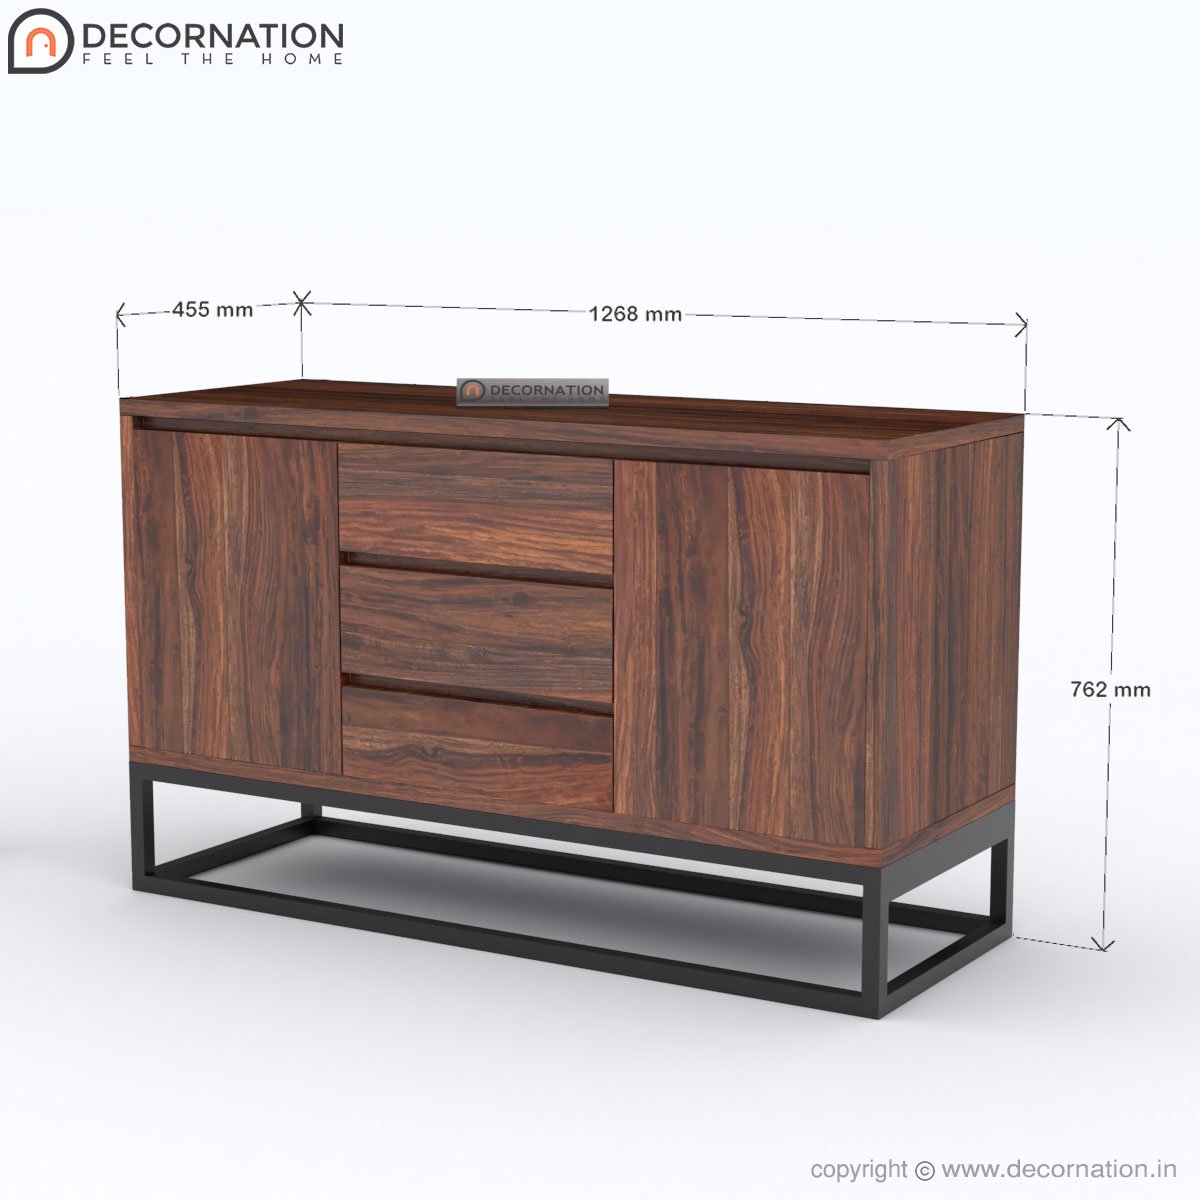 https://cdn.decornation.in/wp-content/uploads/2020/03/buy-online-decornation-furniture-9.jpg